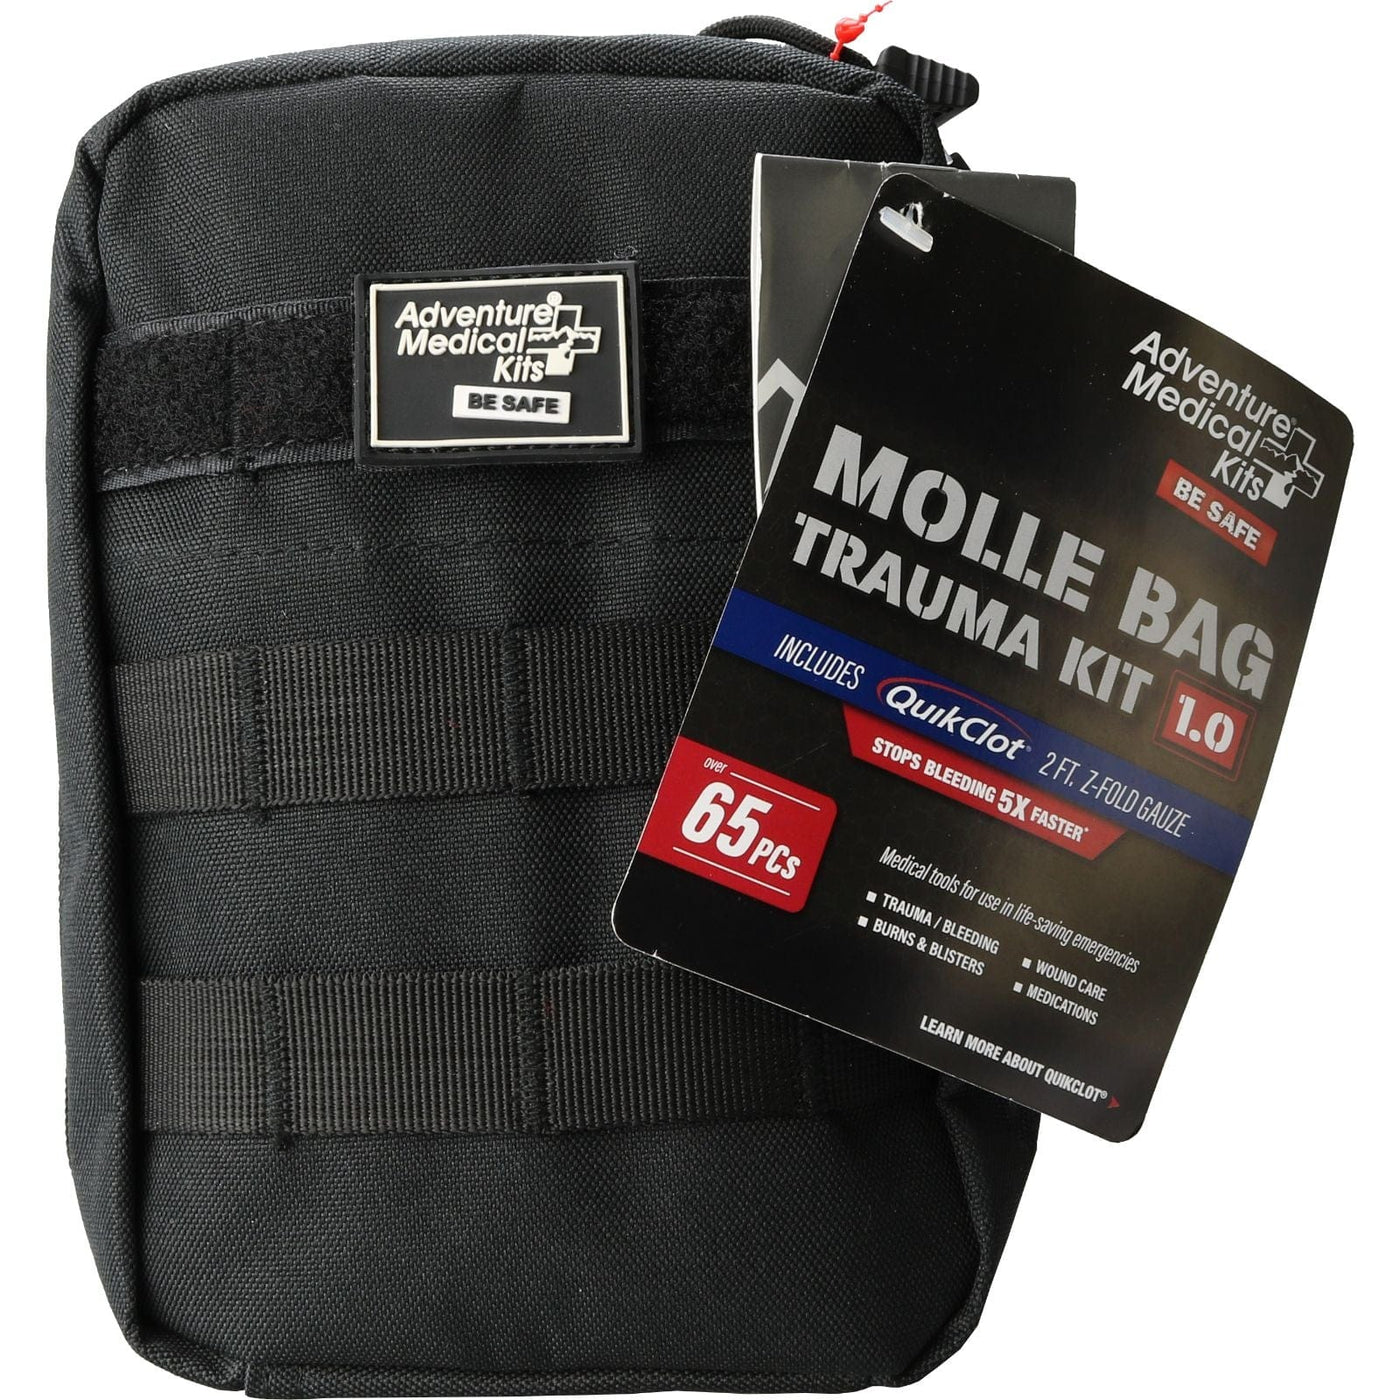 Adventure Medical Kits Adventure Medical Kits Molle Bag Trauma Kit 1.0 Black Camping And Outdoor